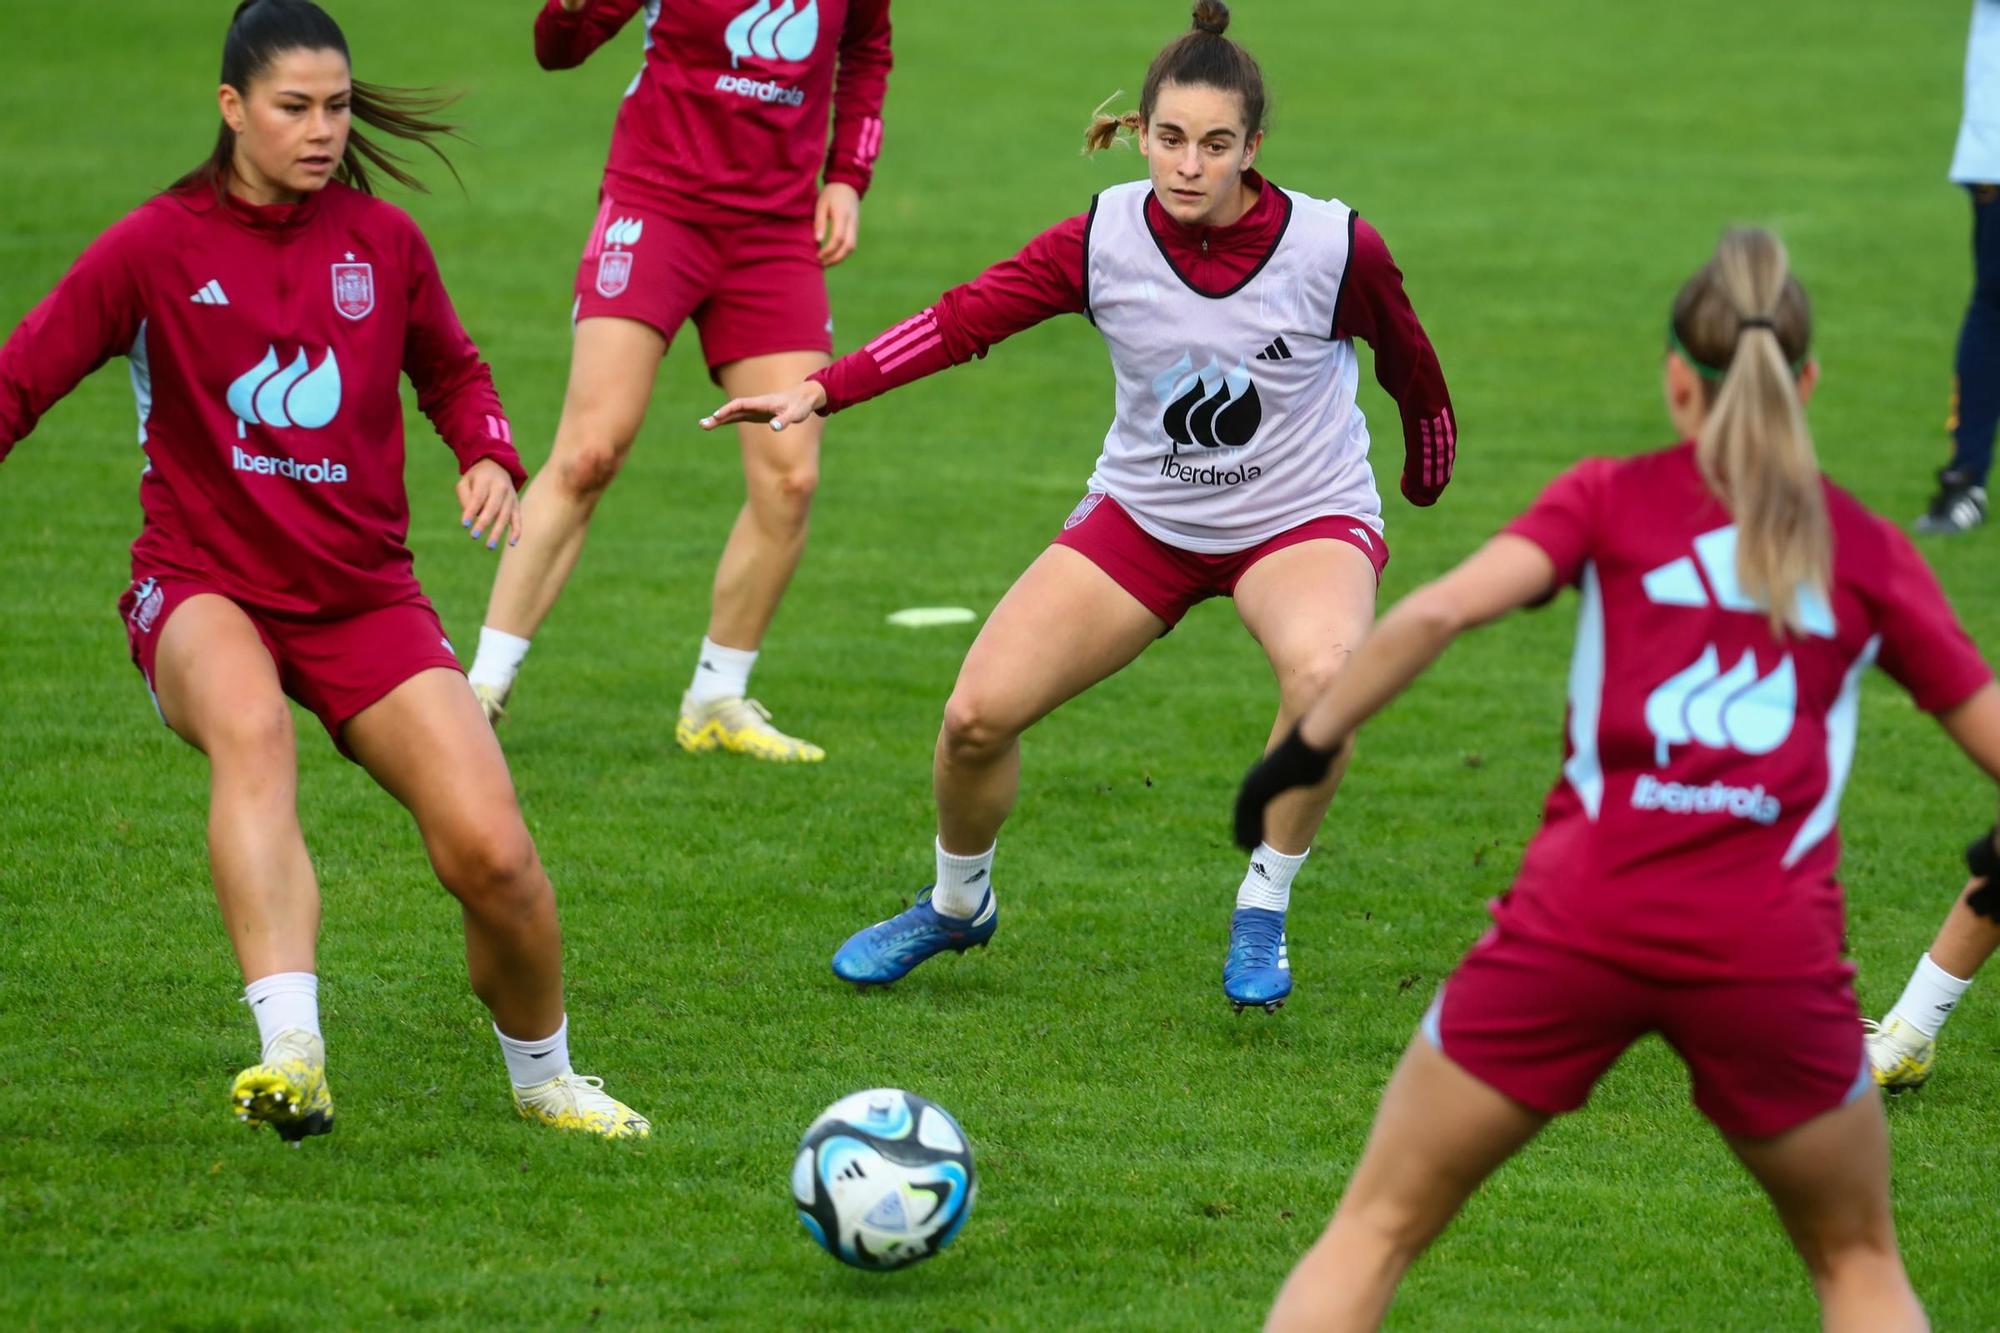 Galicia recibe a la selección femenina de fútbol